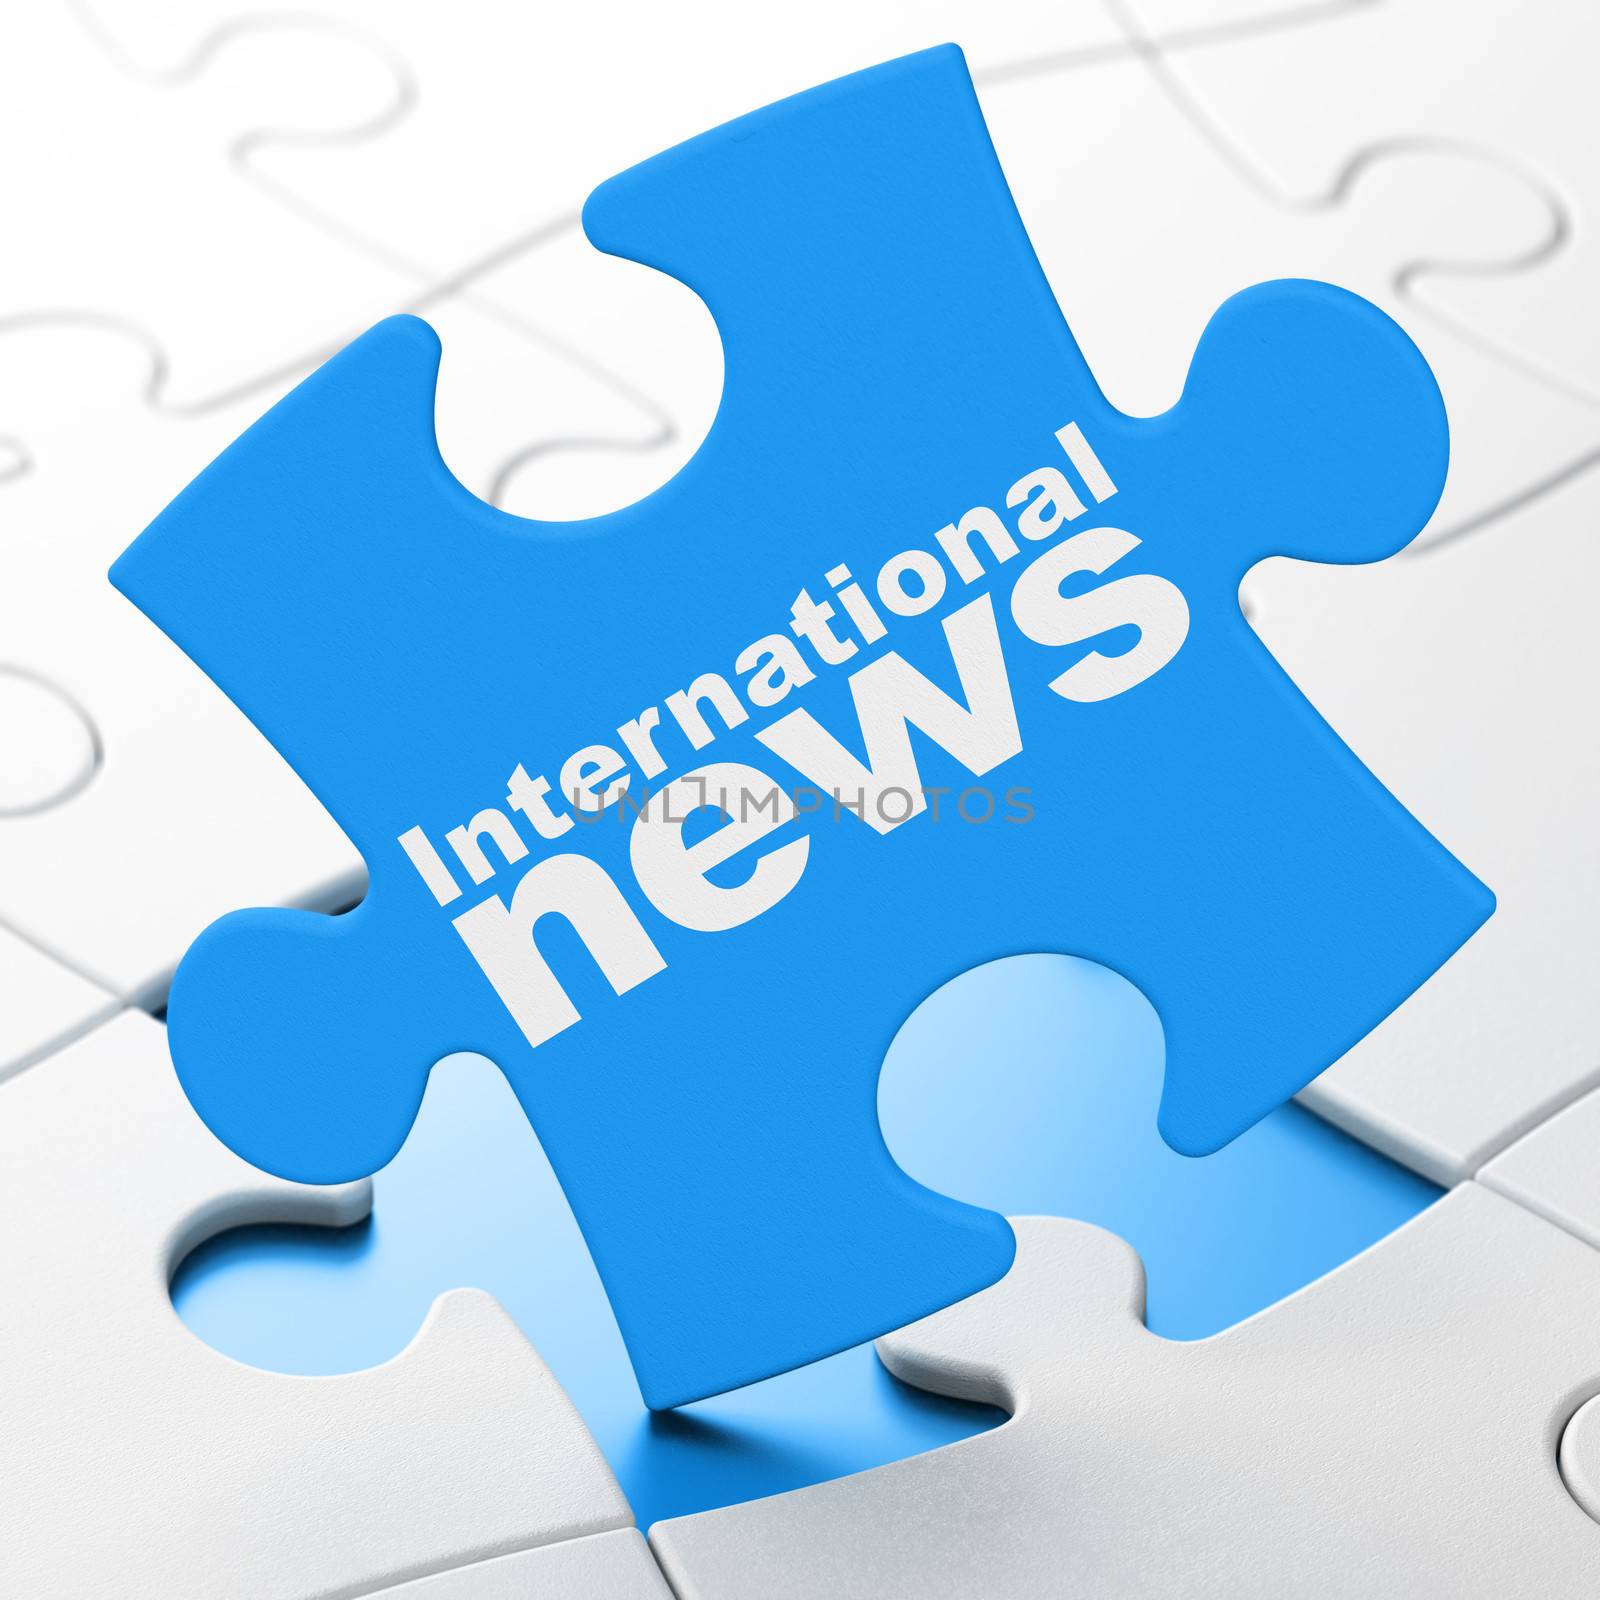 News concept: International News on puzzle background by maxkabakov